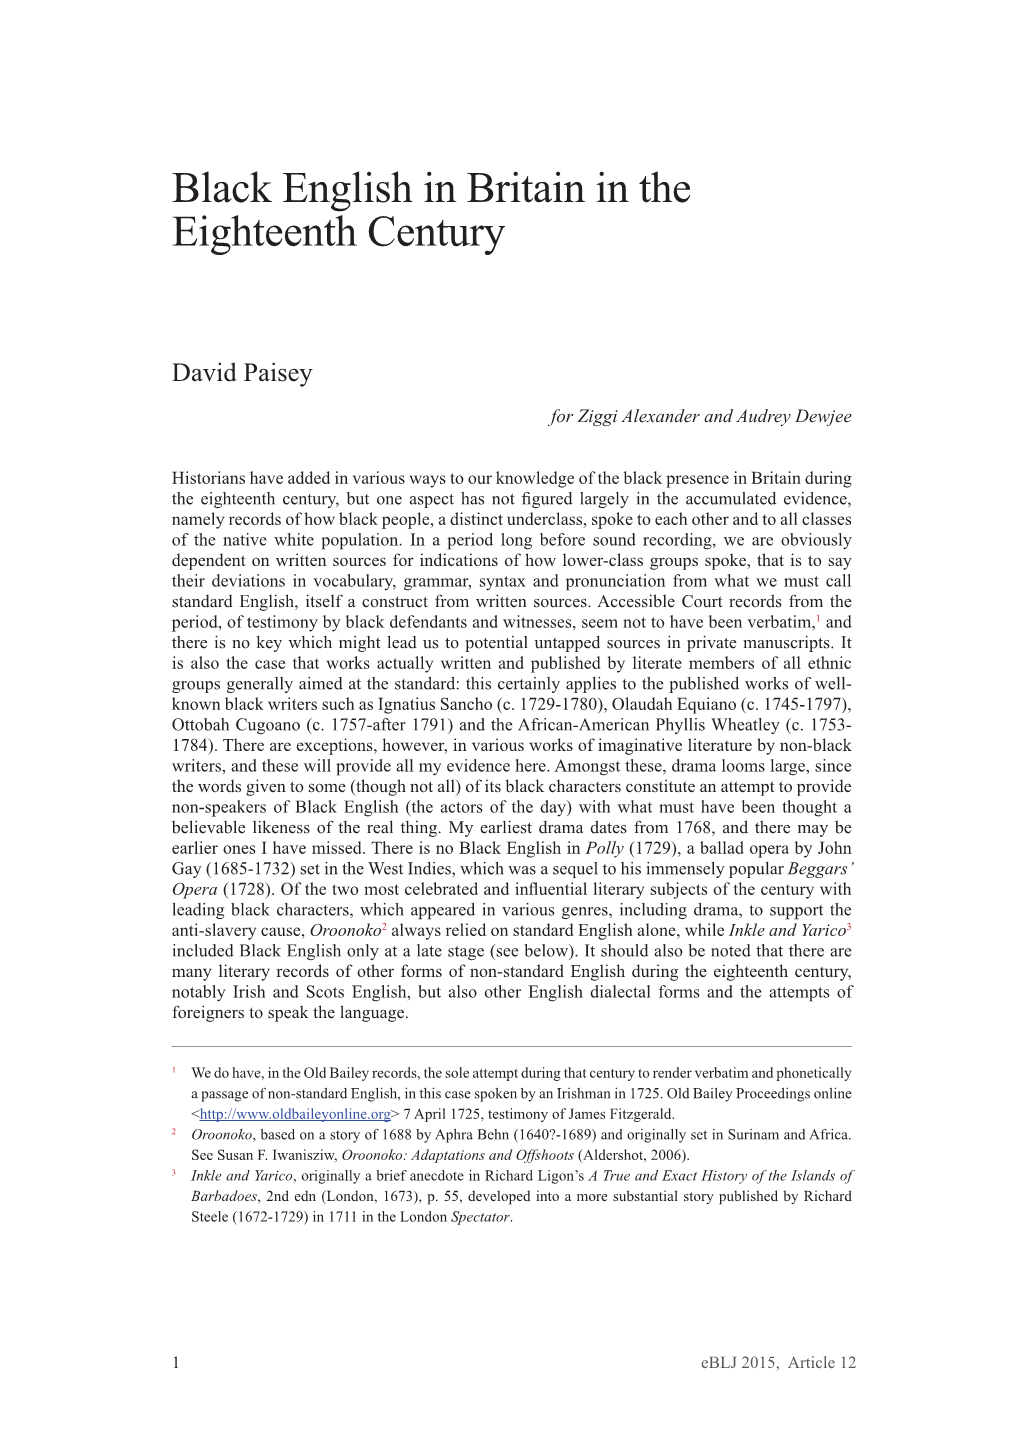 Black English in Britain in the Eighteenth Century